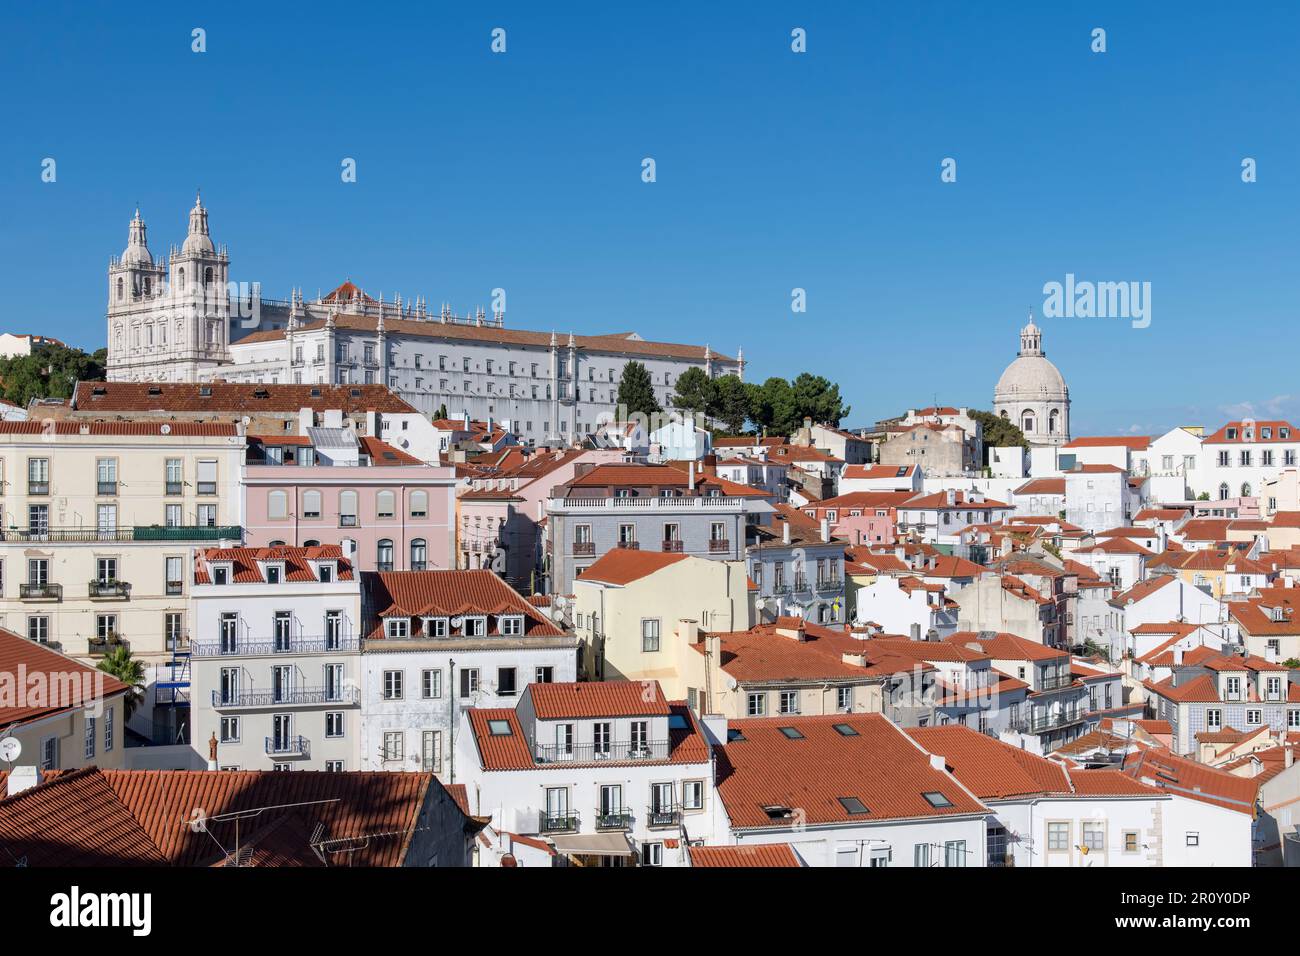 View of Alfama neighborhood Lisbon, Portugal with on hill Monastery of São Vicente de Fora and Church of Santa Engrácia (Igreja de Santa Engrácia) Stock Photo